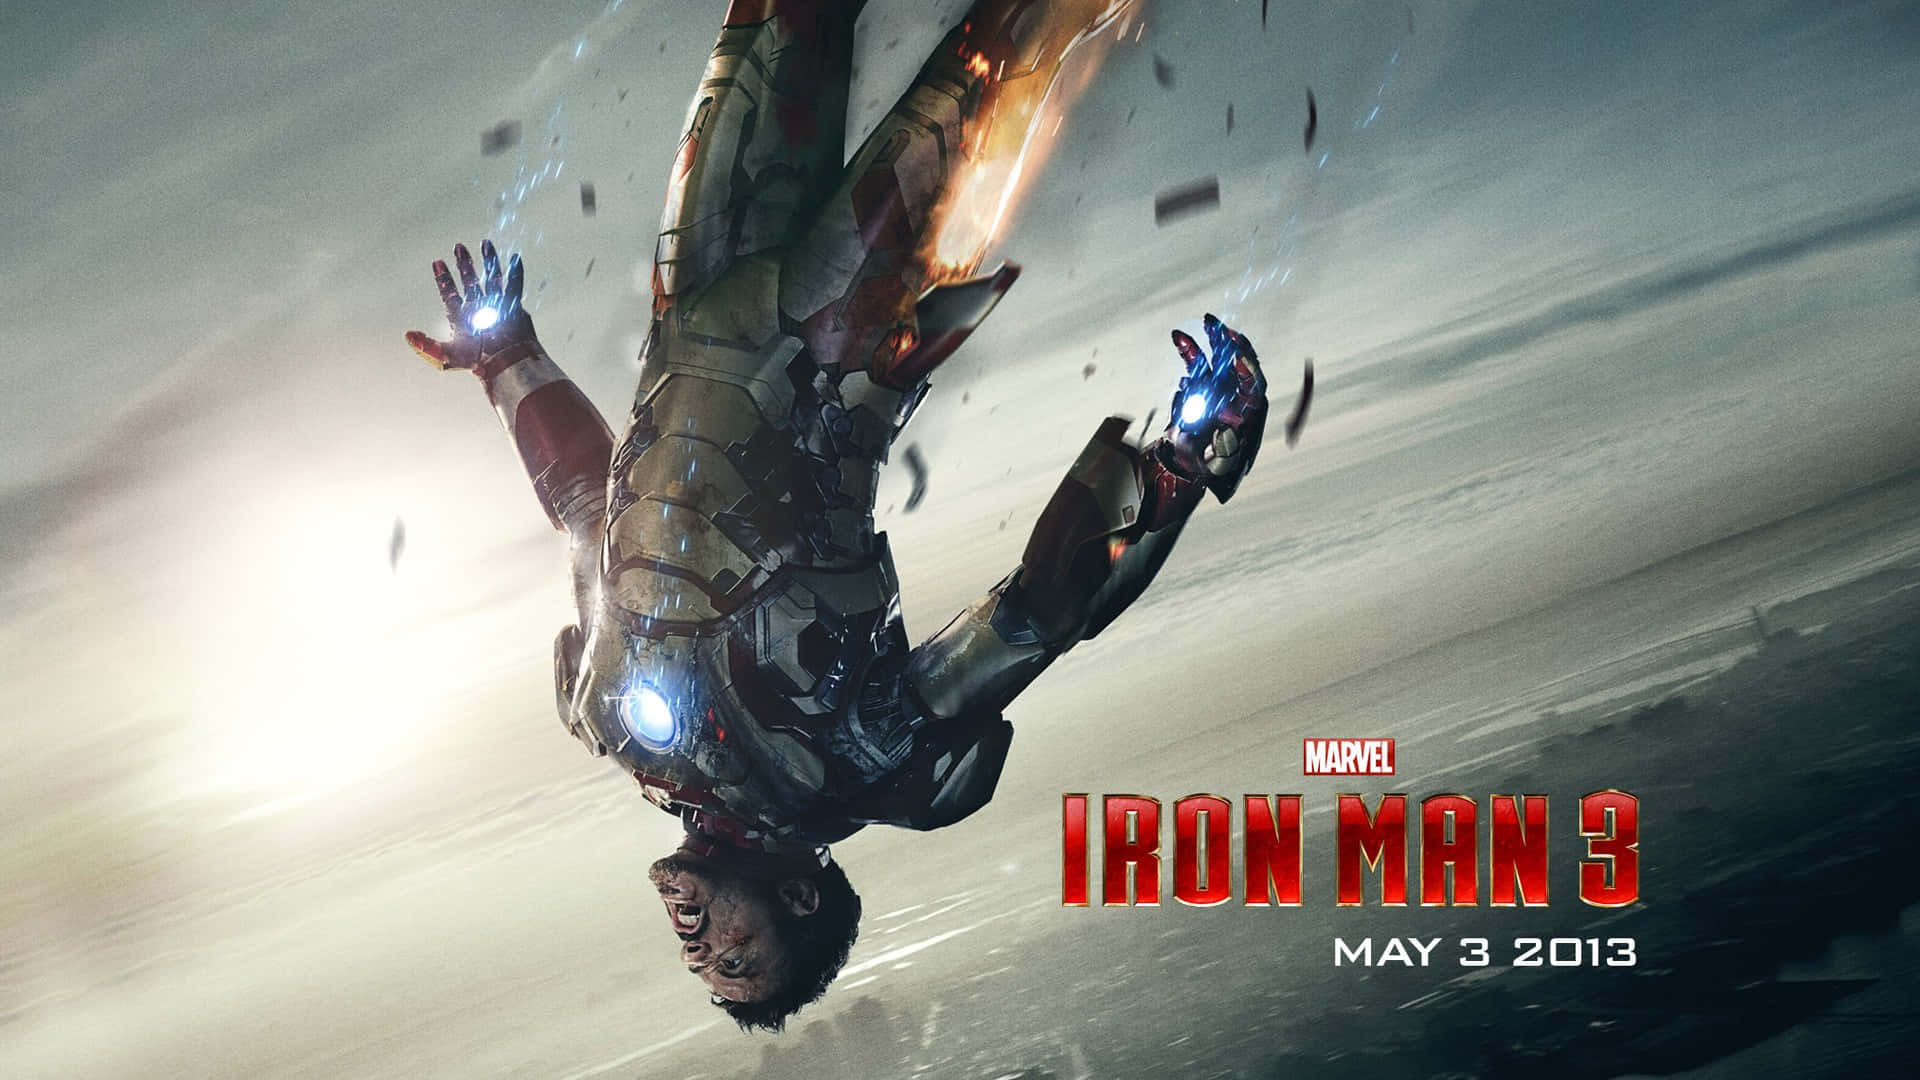 Robert Downey Jr As Iron Man In Iron Man 3 Background